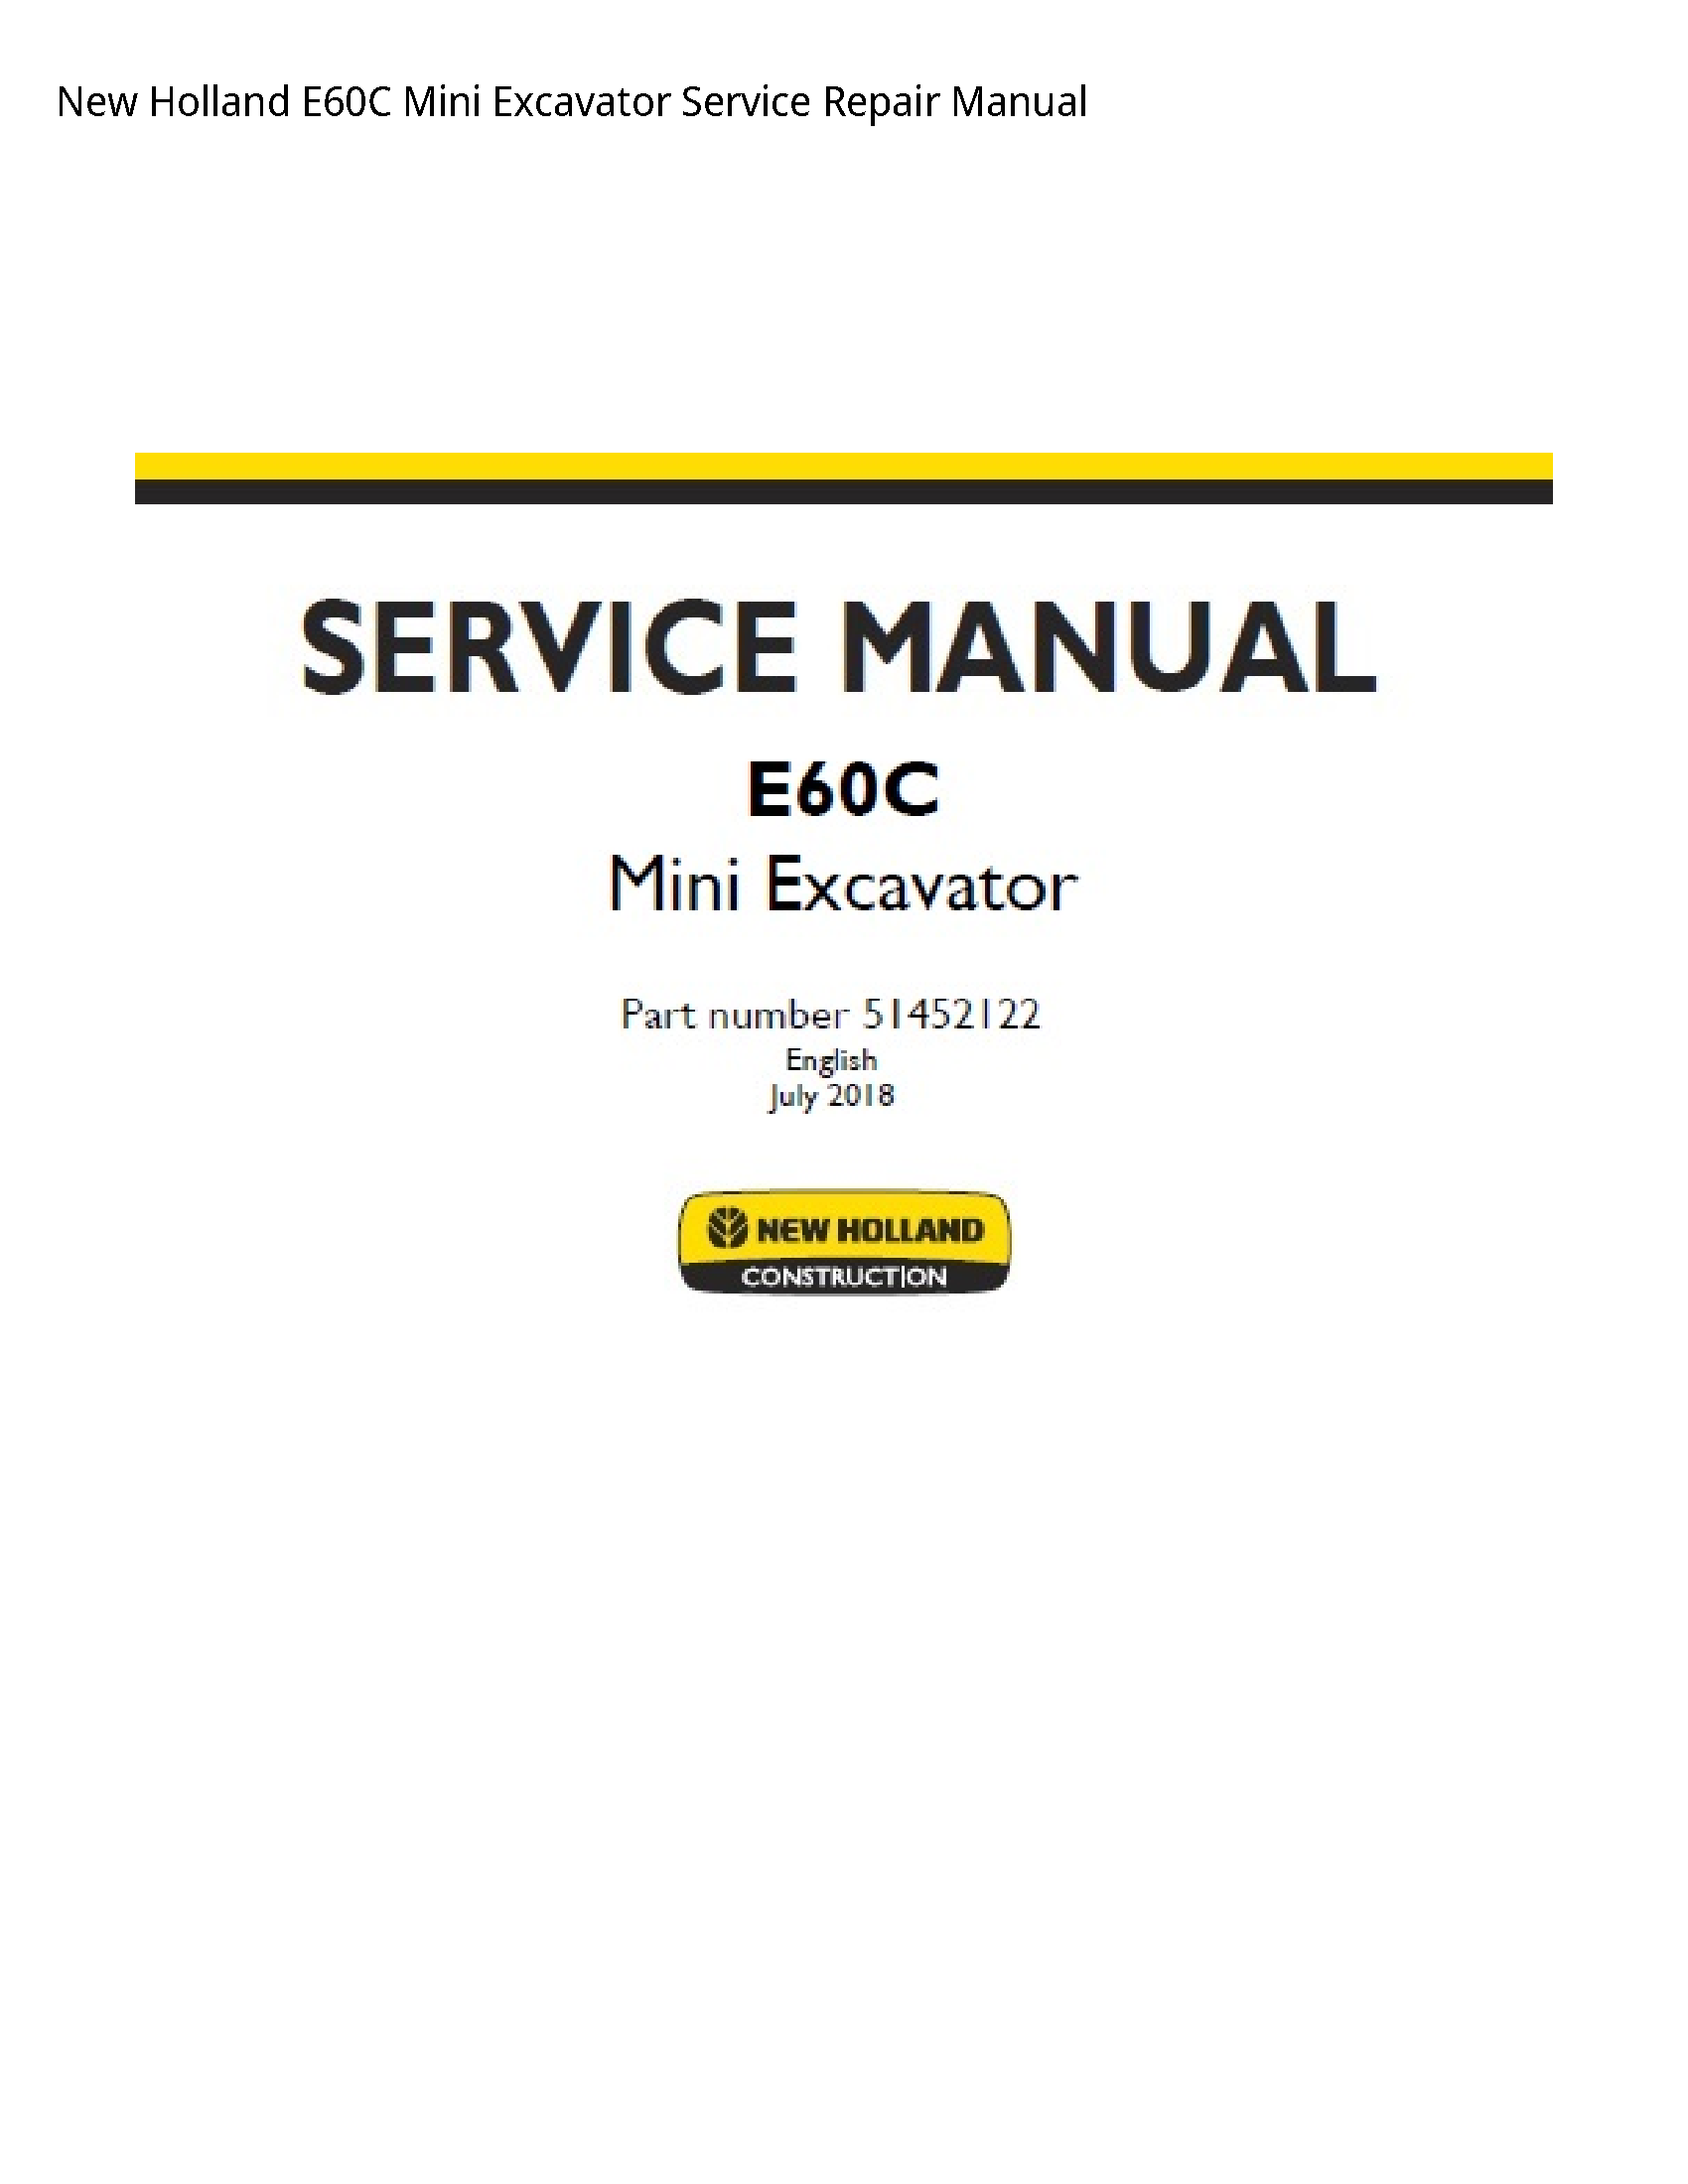 New Holland E60C Mini Excavator manual